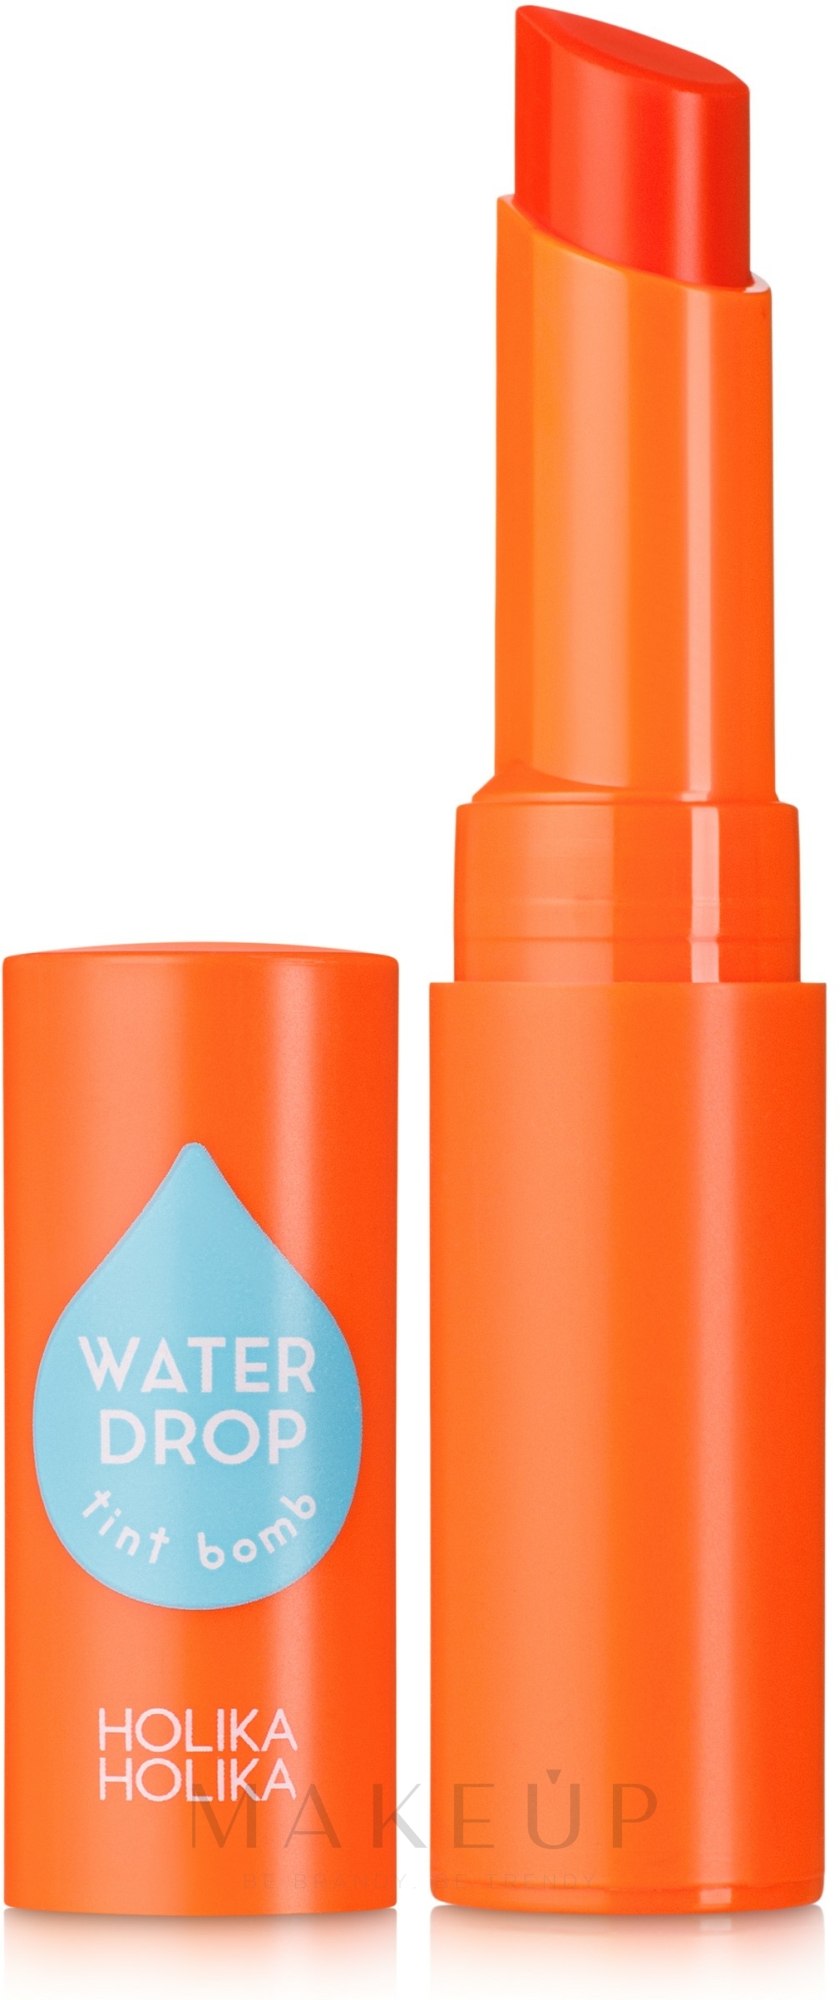 Feuchtigkeitsspendender Lippenstift - Holika Holika Water Drop Tint Bomb — Foto 03 - Orange Water